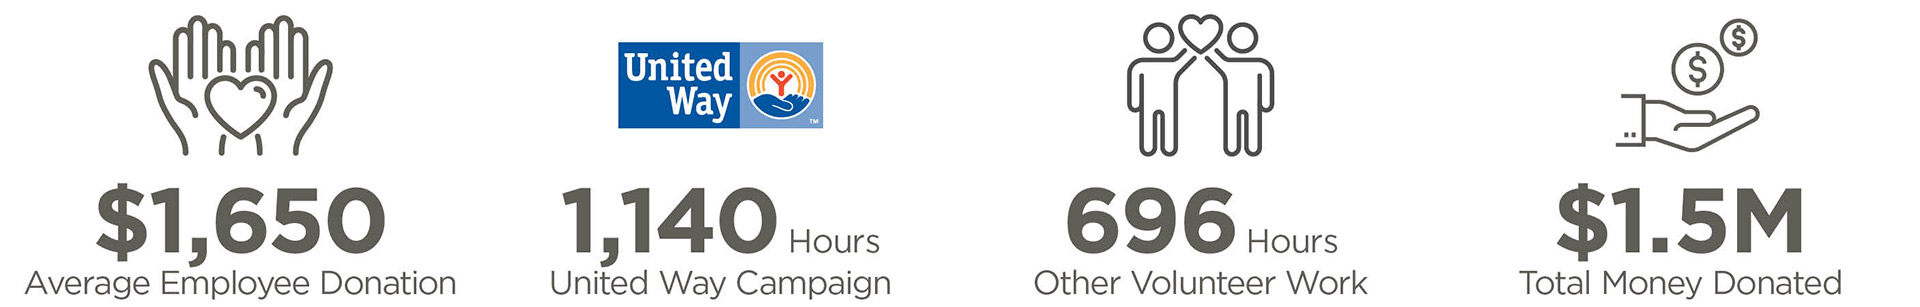 Infographic Showing Regency Philanthropy Totals: $1,650 Average Employee Donation; 1140 United Way Volunteer Hours; 696 Other Volunteer Work Hours; $1.5M Total Money Donated